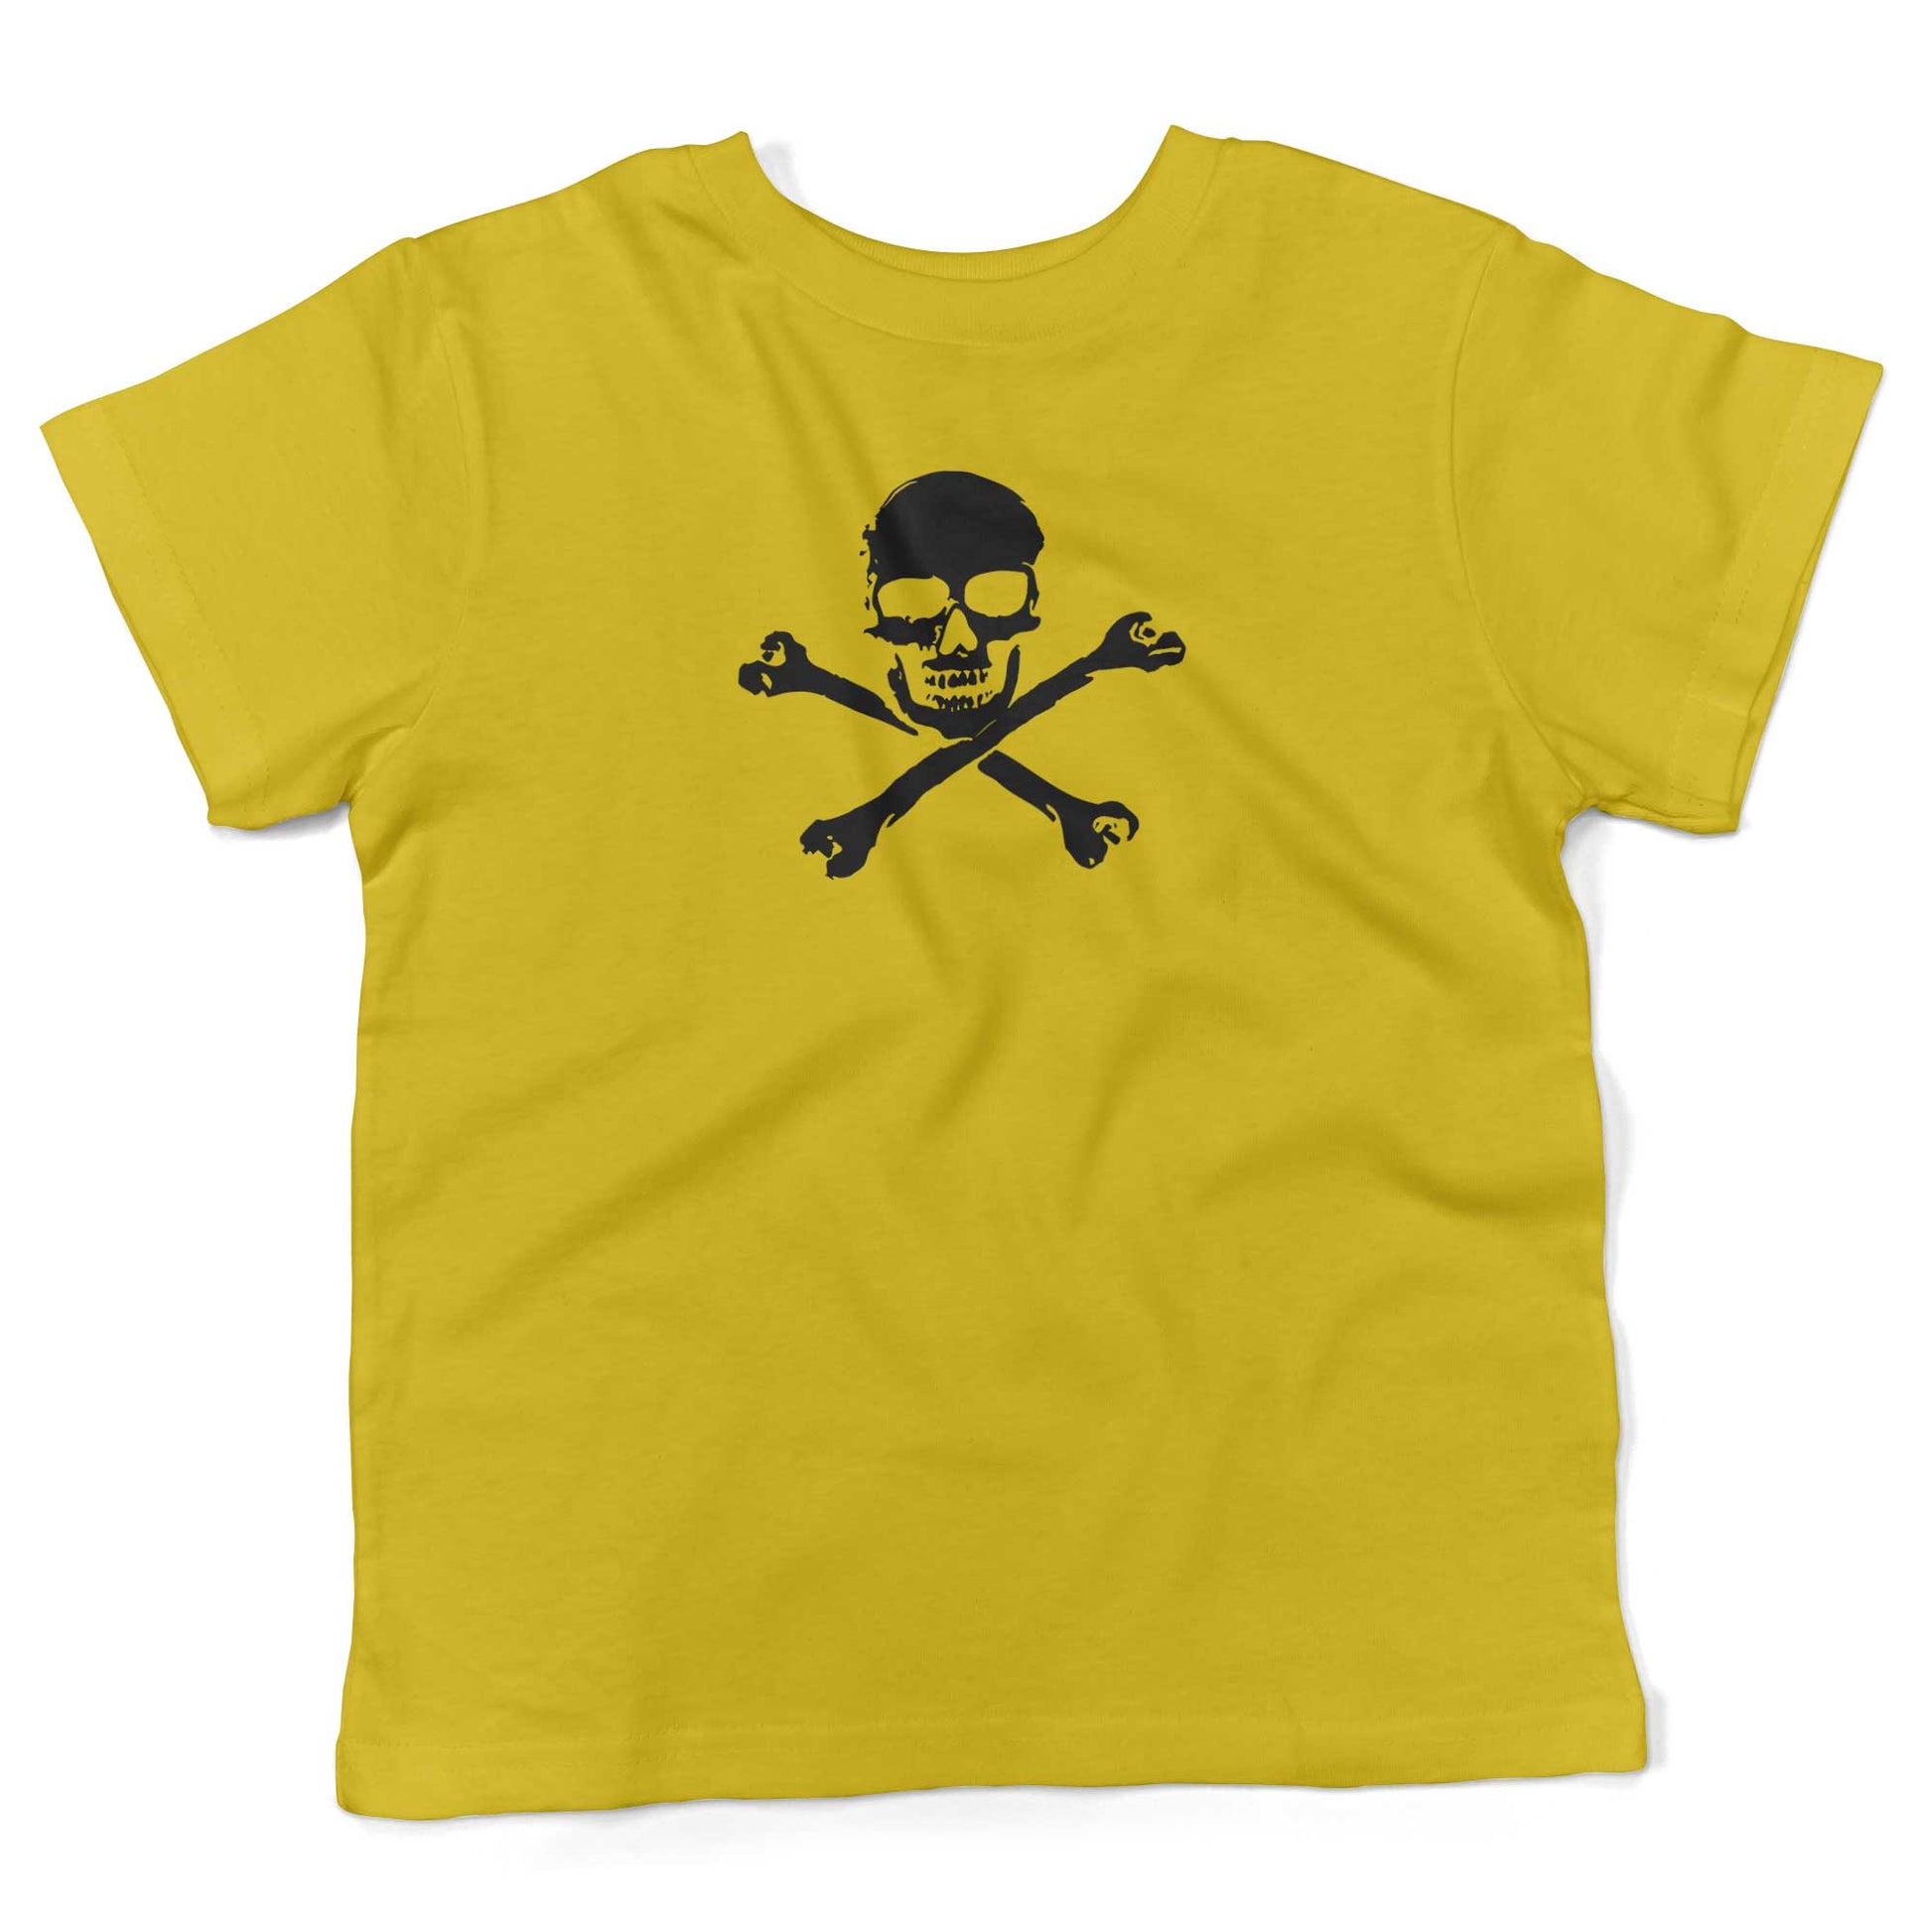 Skull And Crossbones Toddler Shirt-Sunshine Yellow-2T